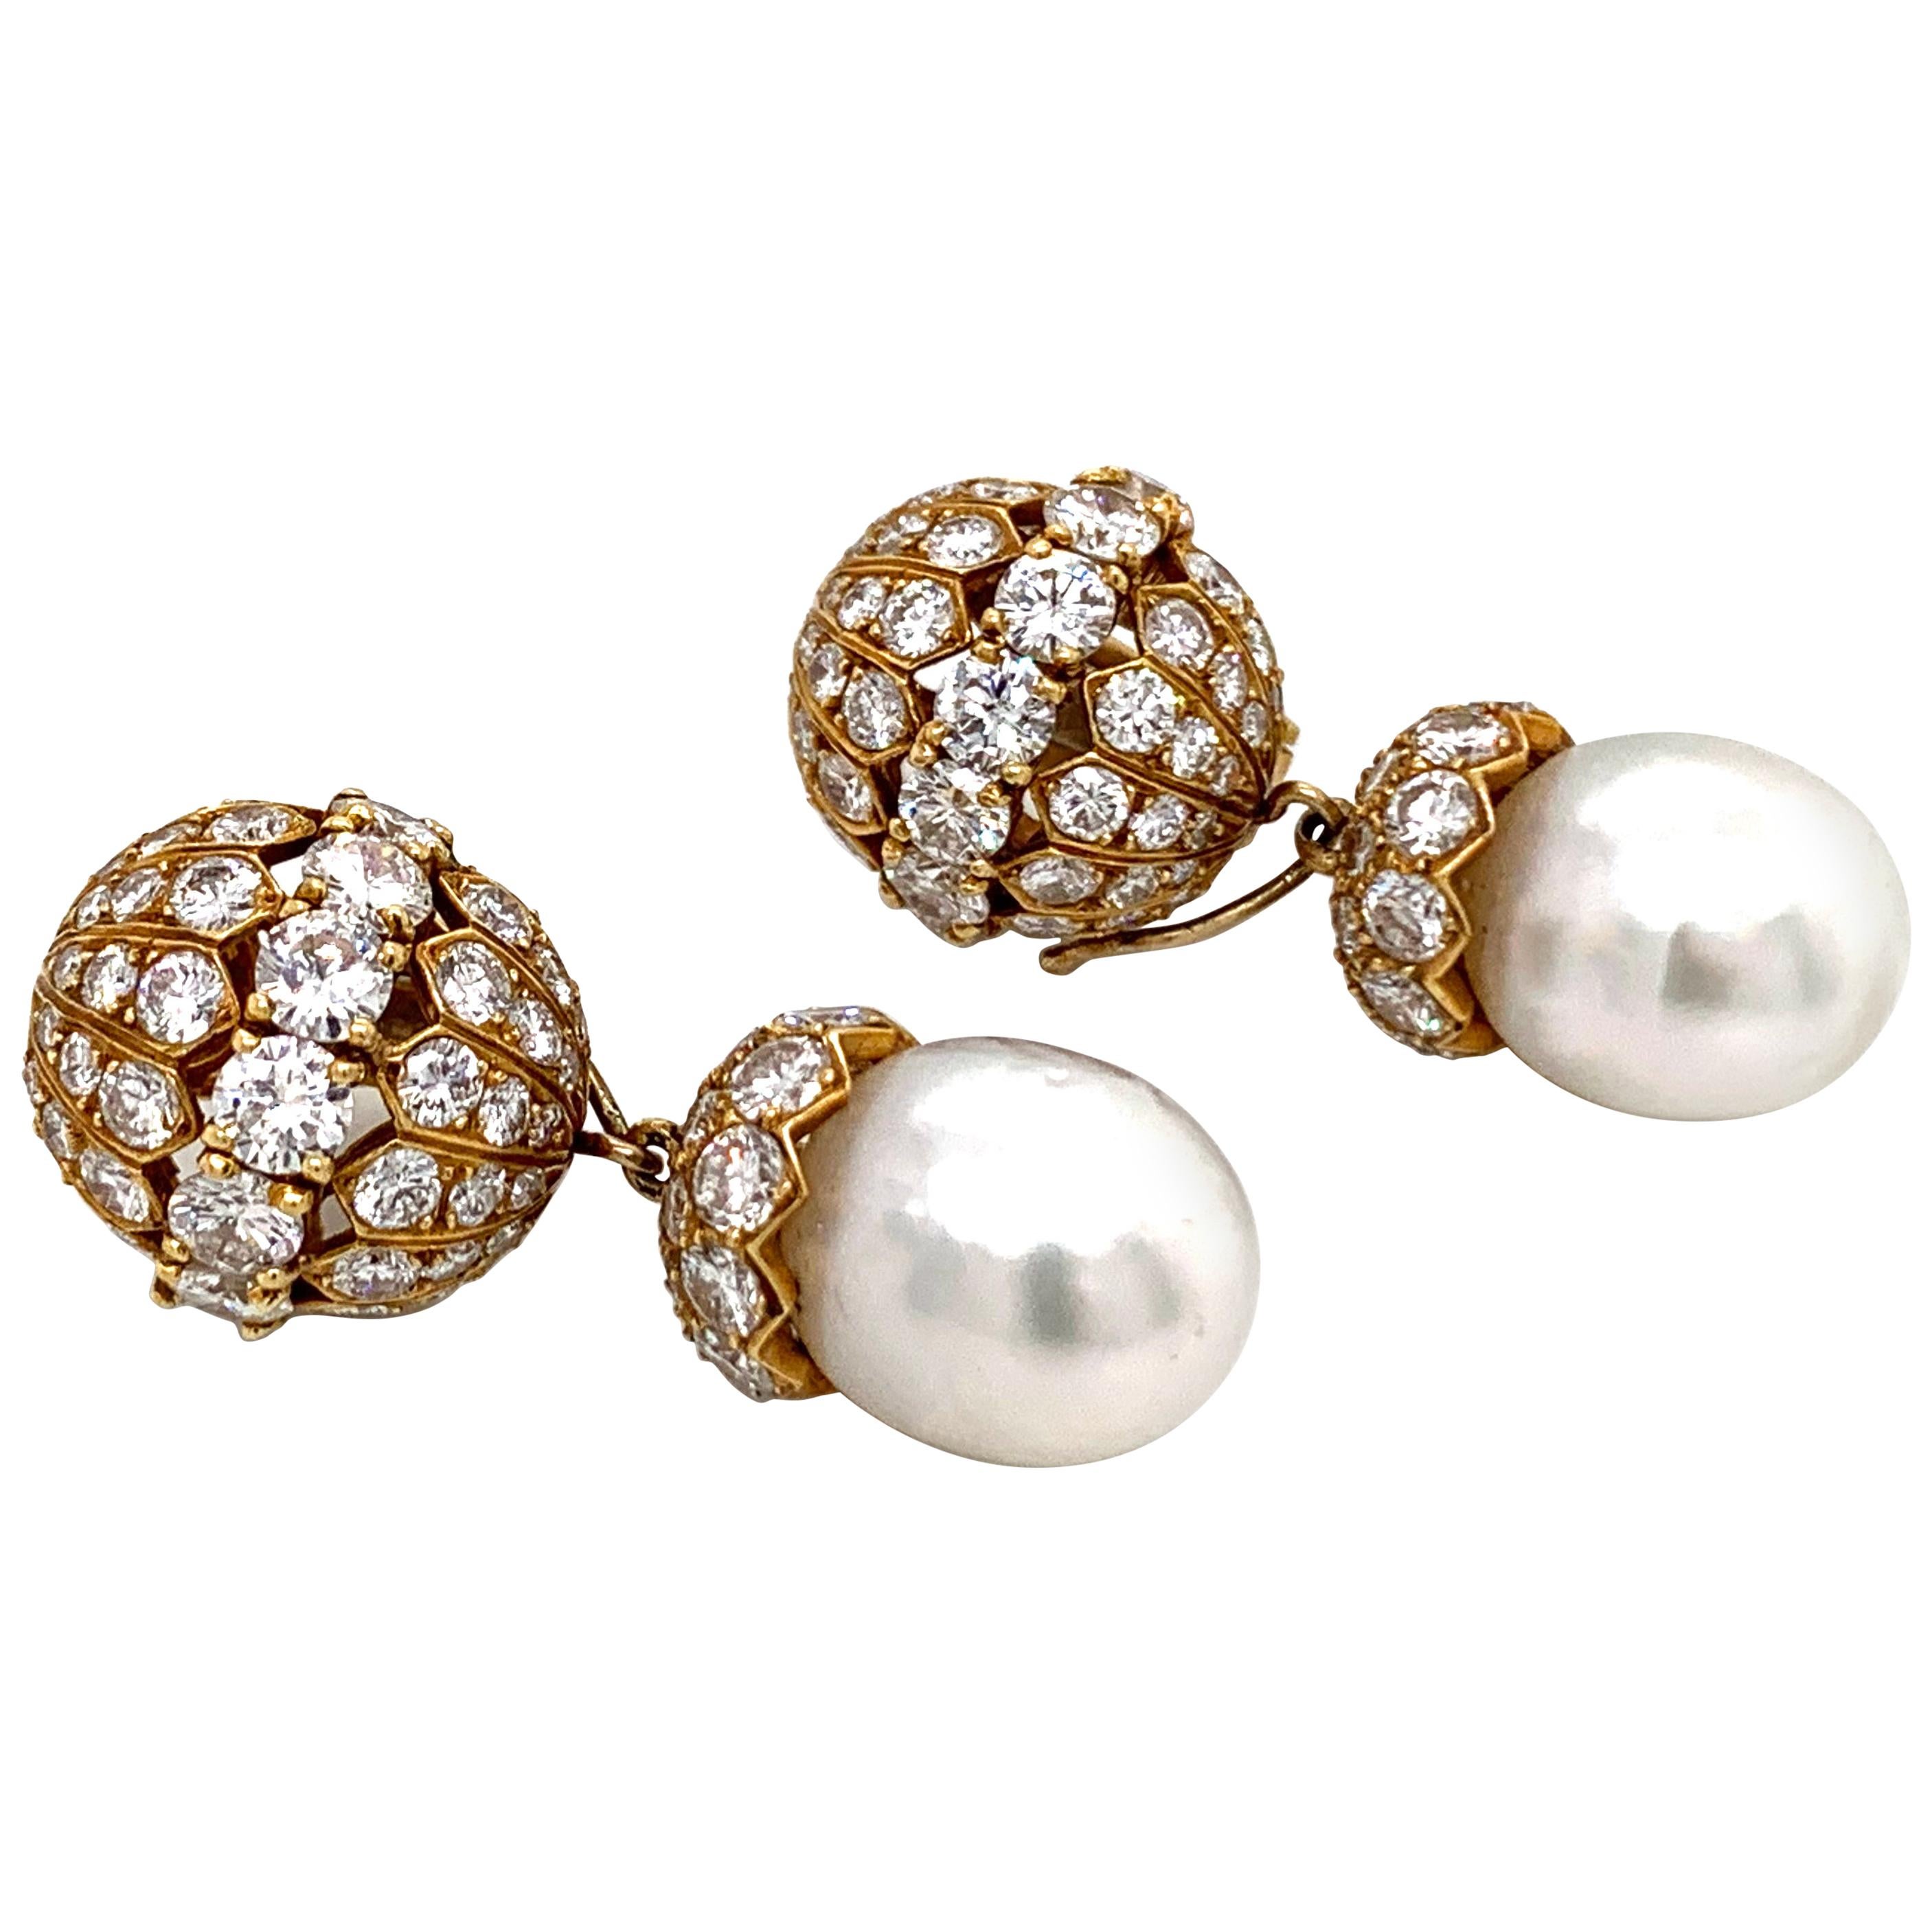 1970s Van Cleef & Arpels 18 Karat Yellow Gold Diamond and Pearl Earrings For Sale